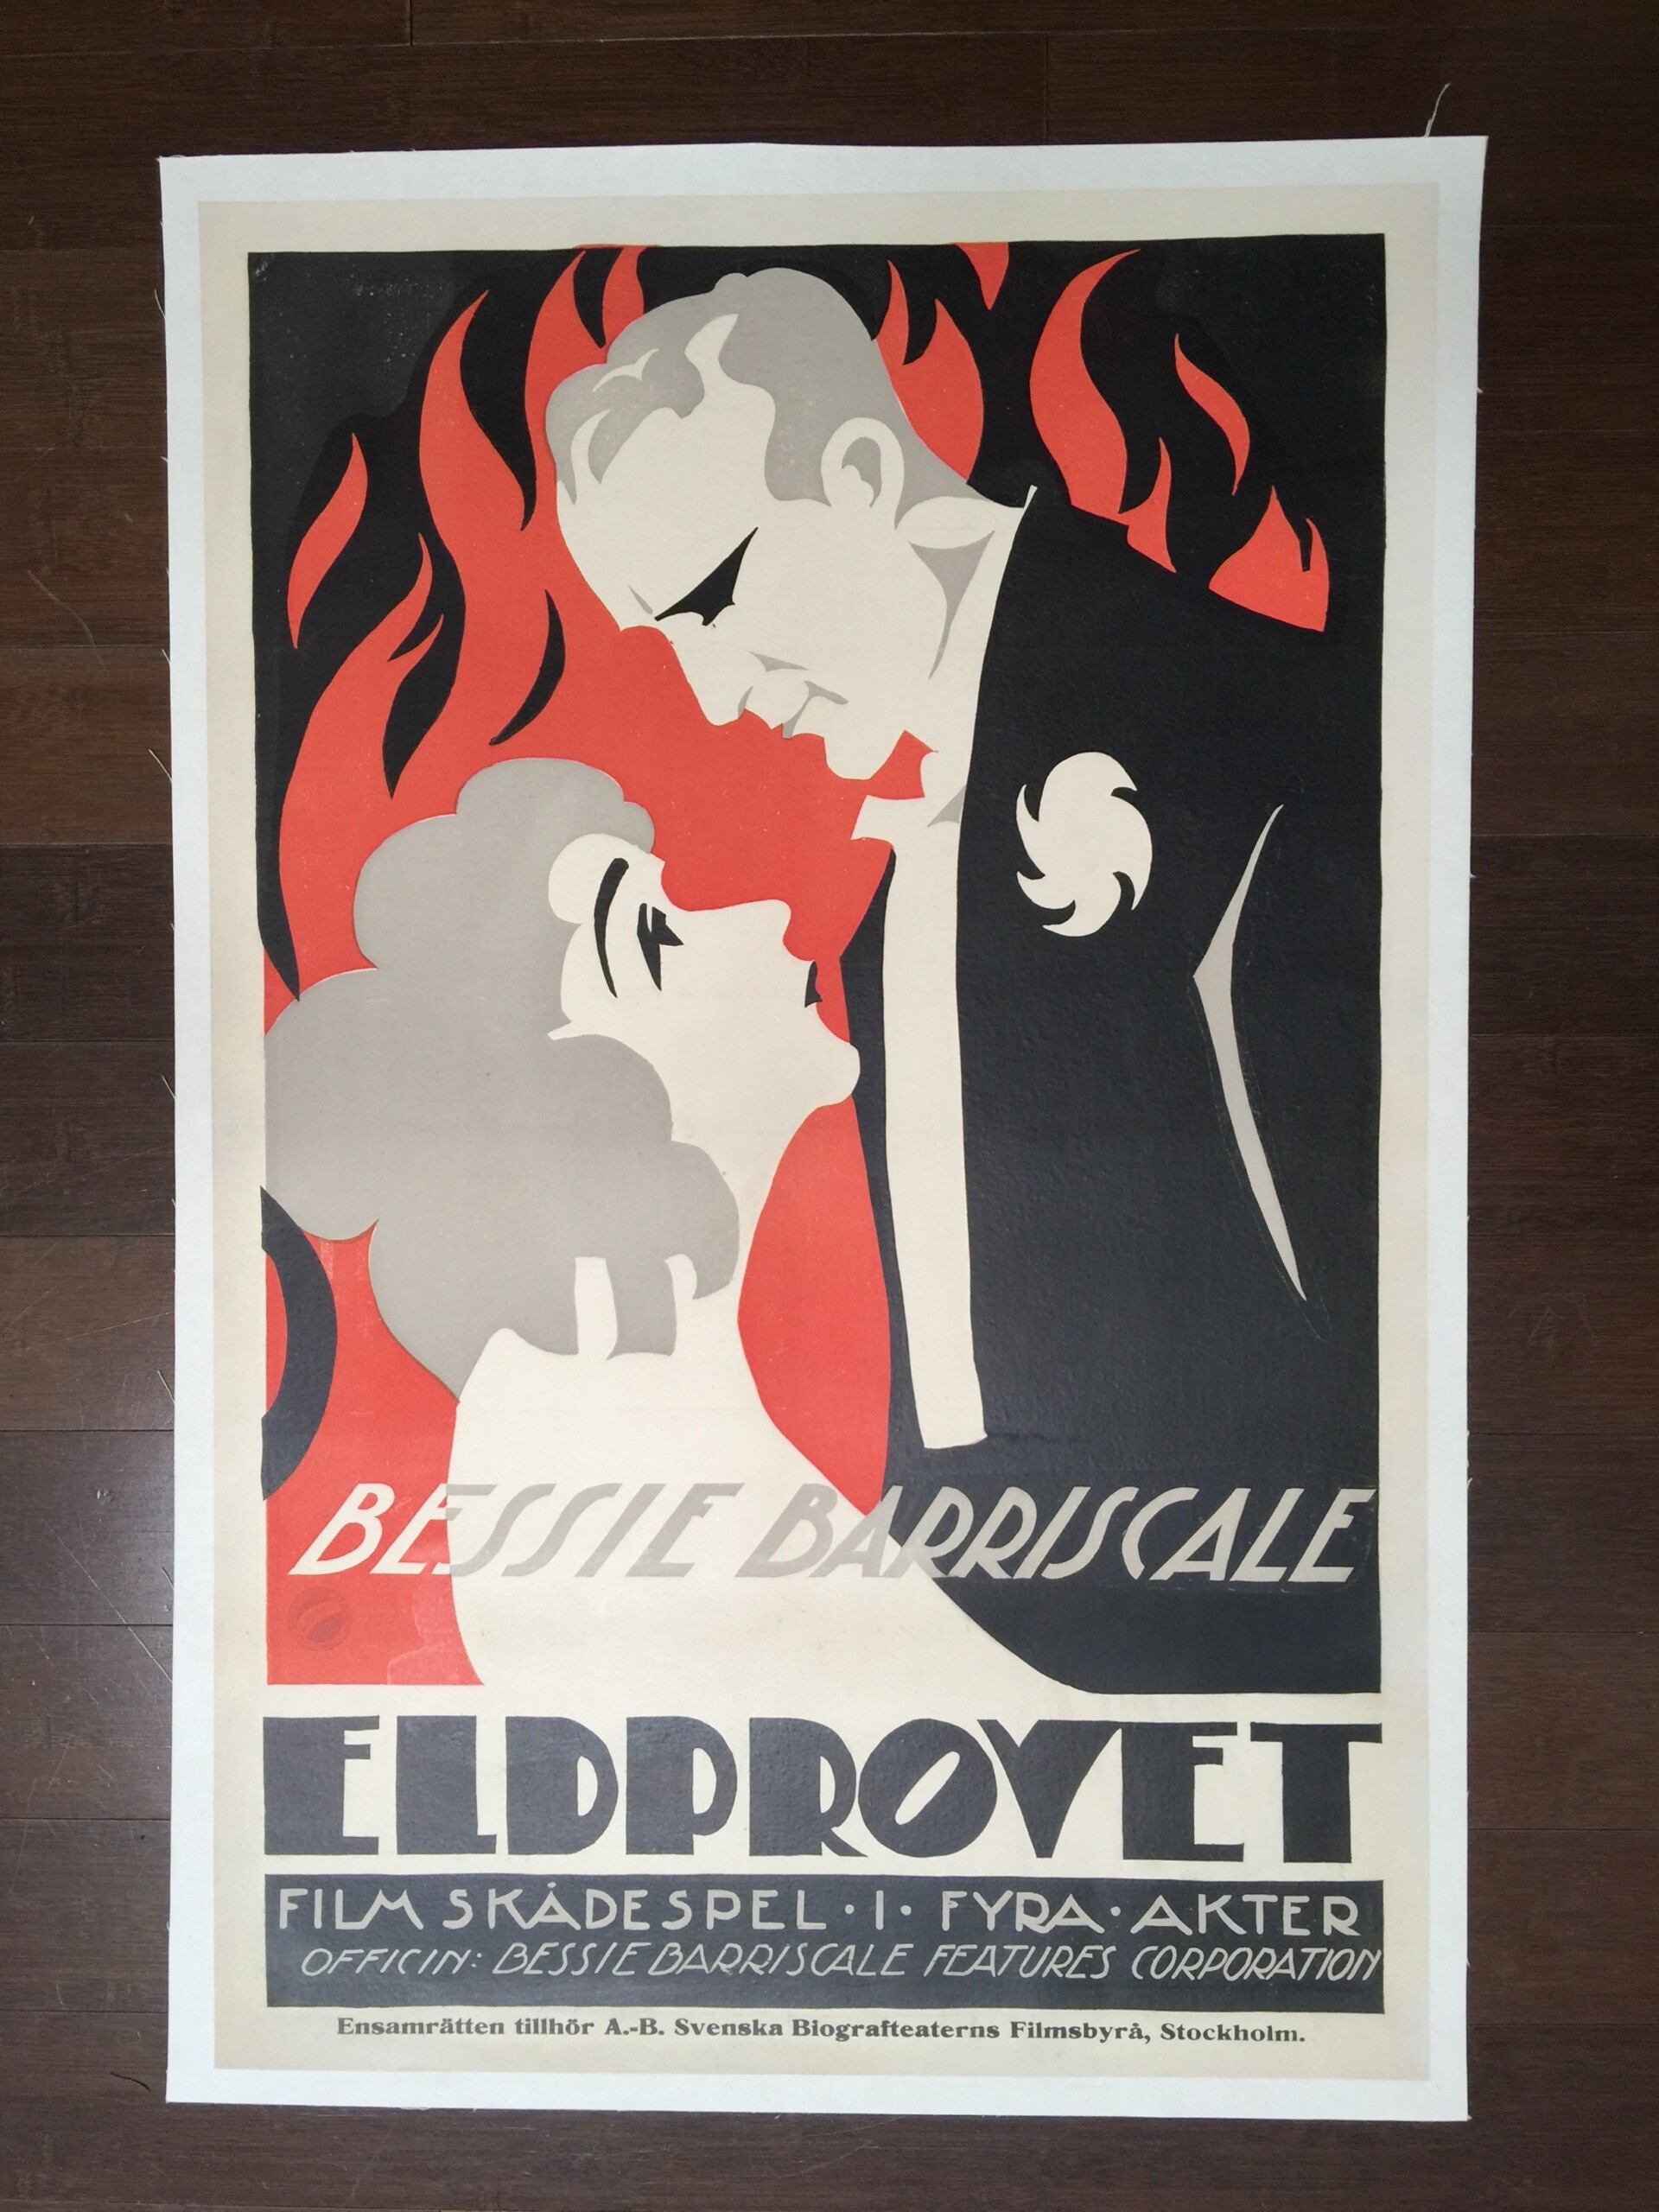 1920s art deco posters